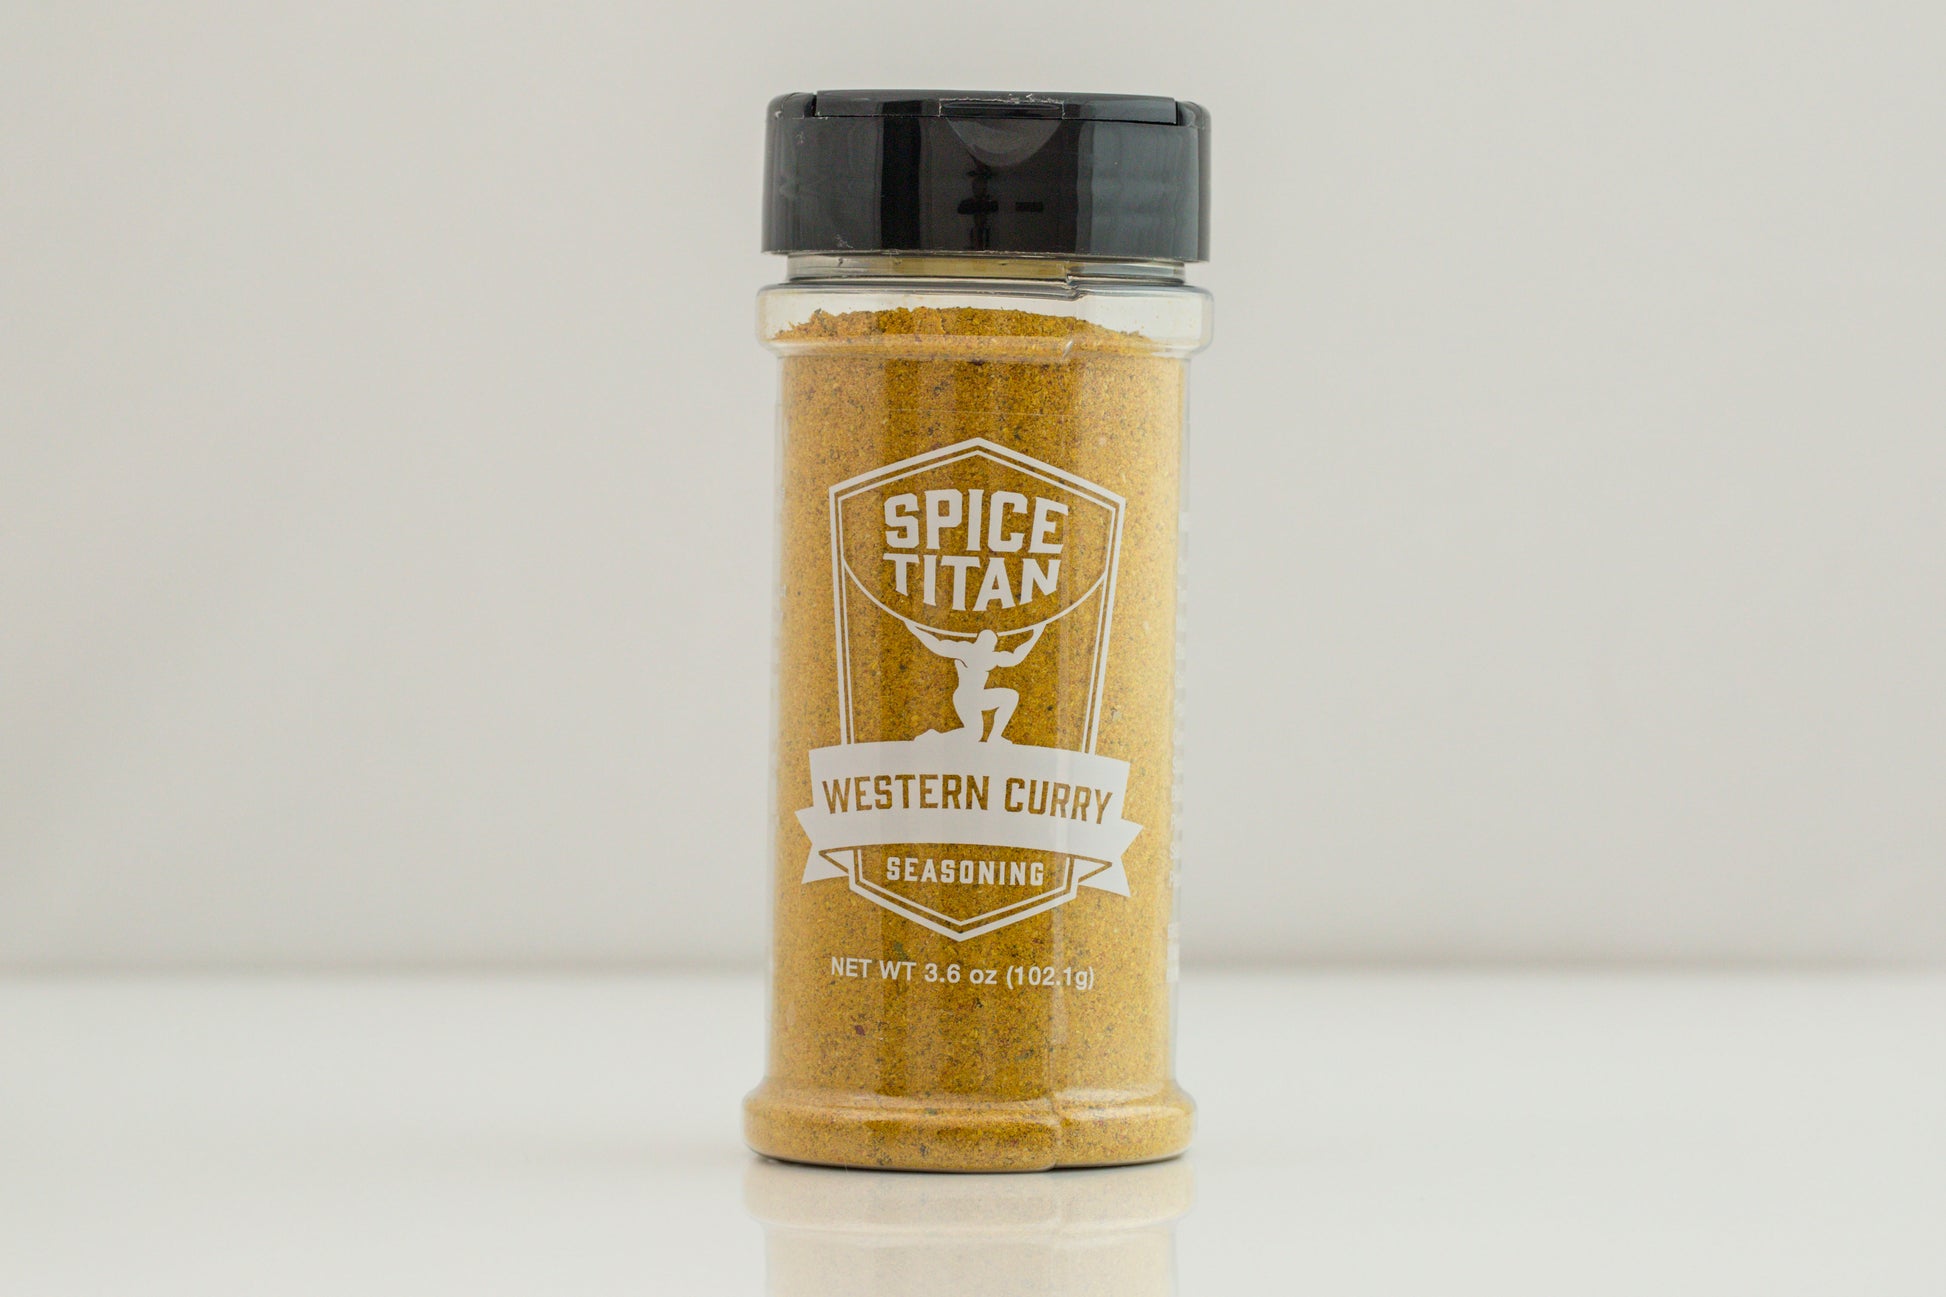 Western Curry Spicetitan.com